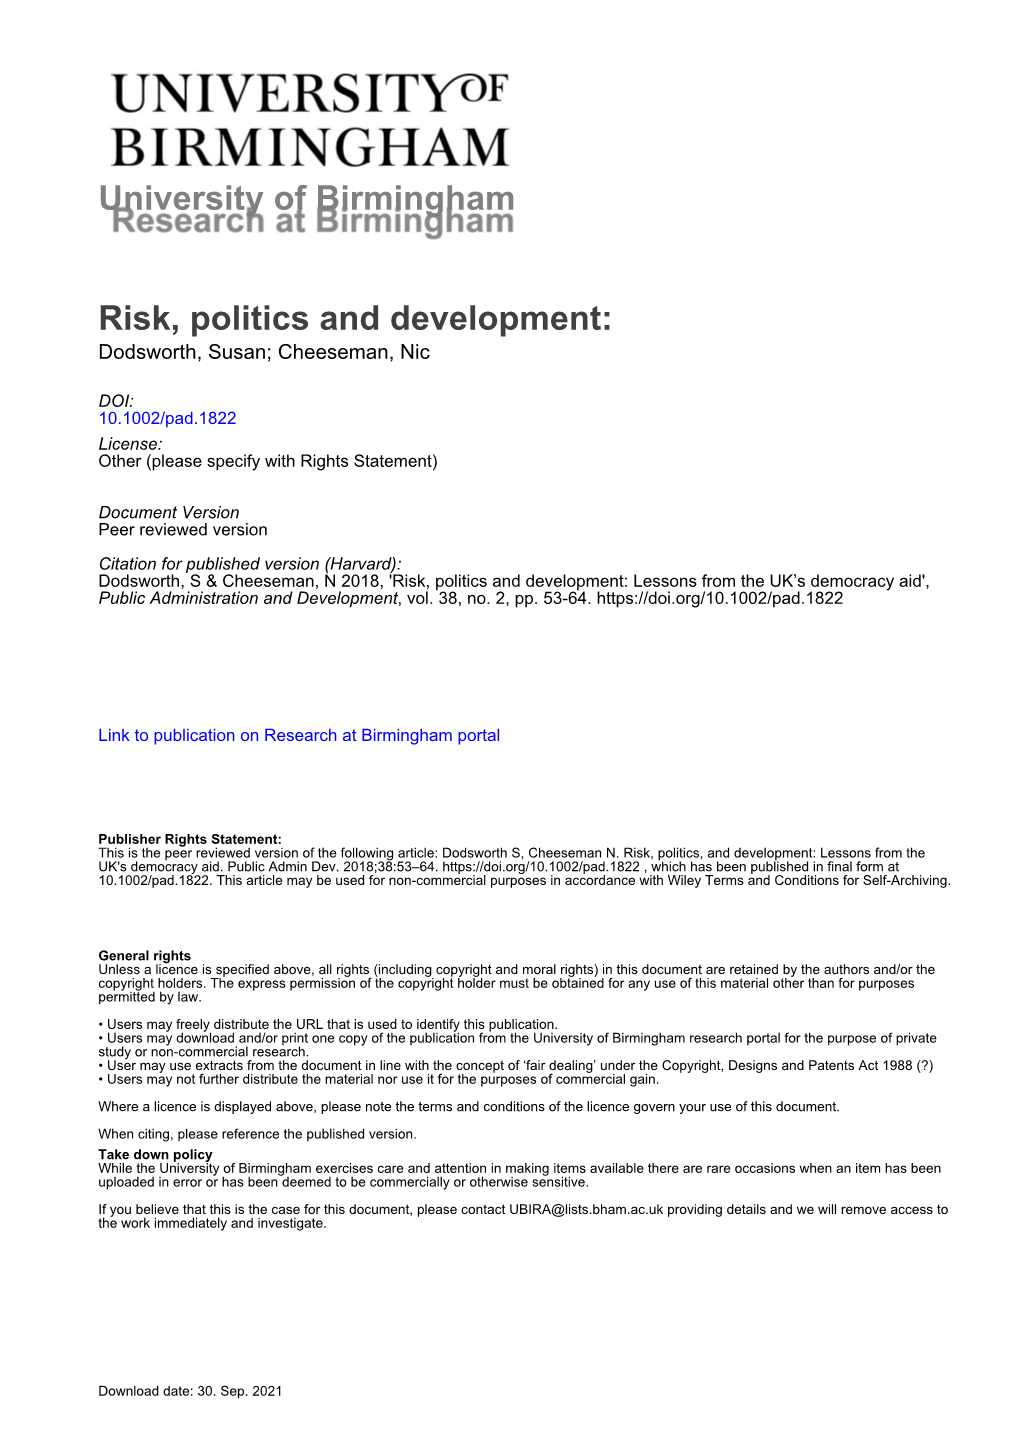 University of Birmingham Risk, Politics and Development